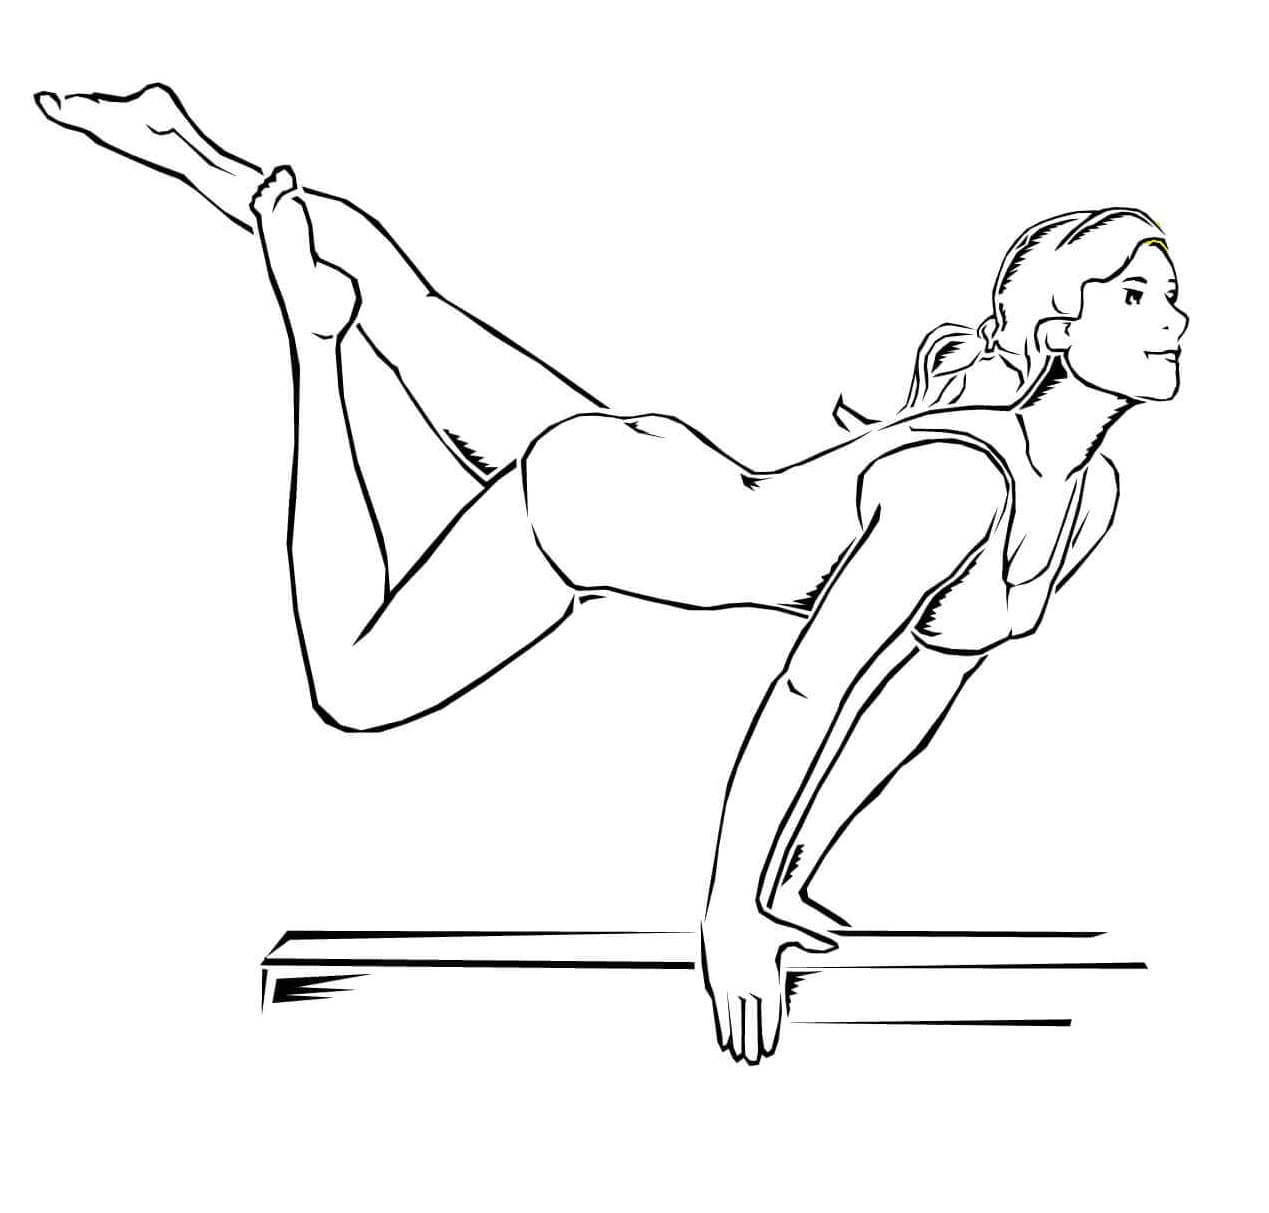 Gymnastics balance beam coloring page